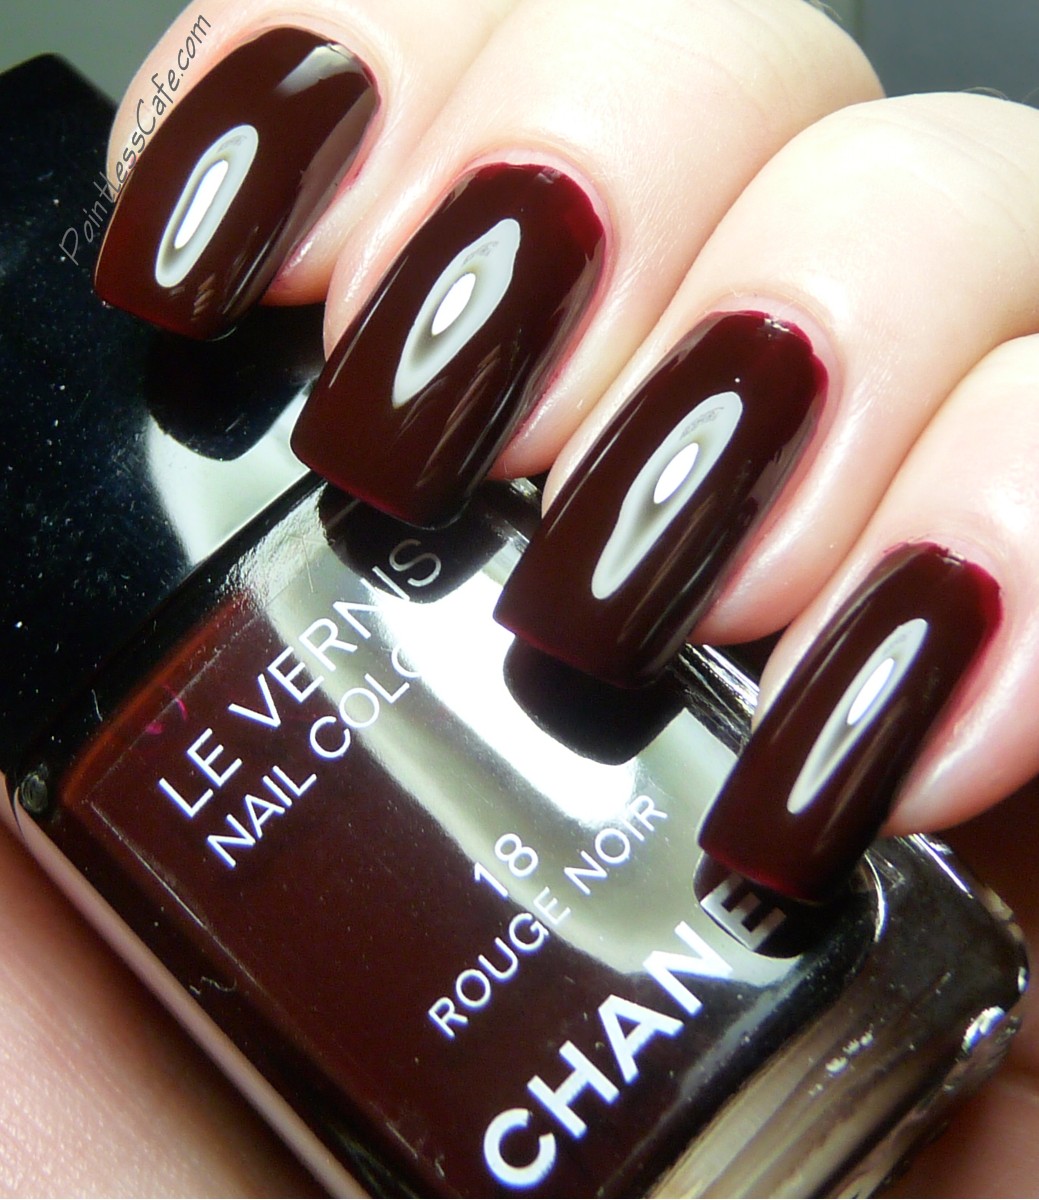 chanel rouge noir dark red nail polish, 1 - SoNailicious